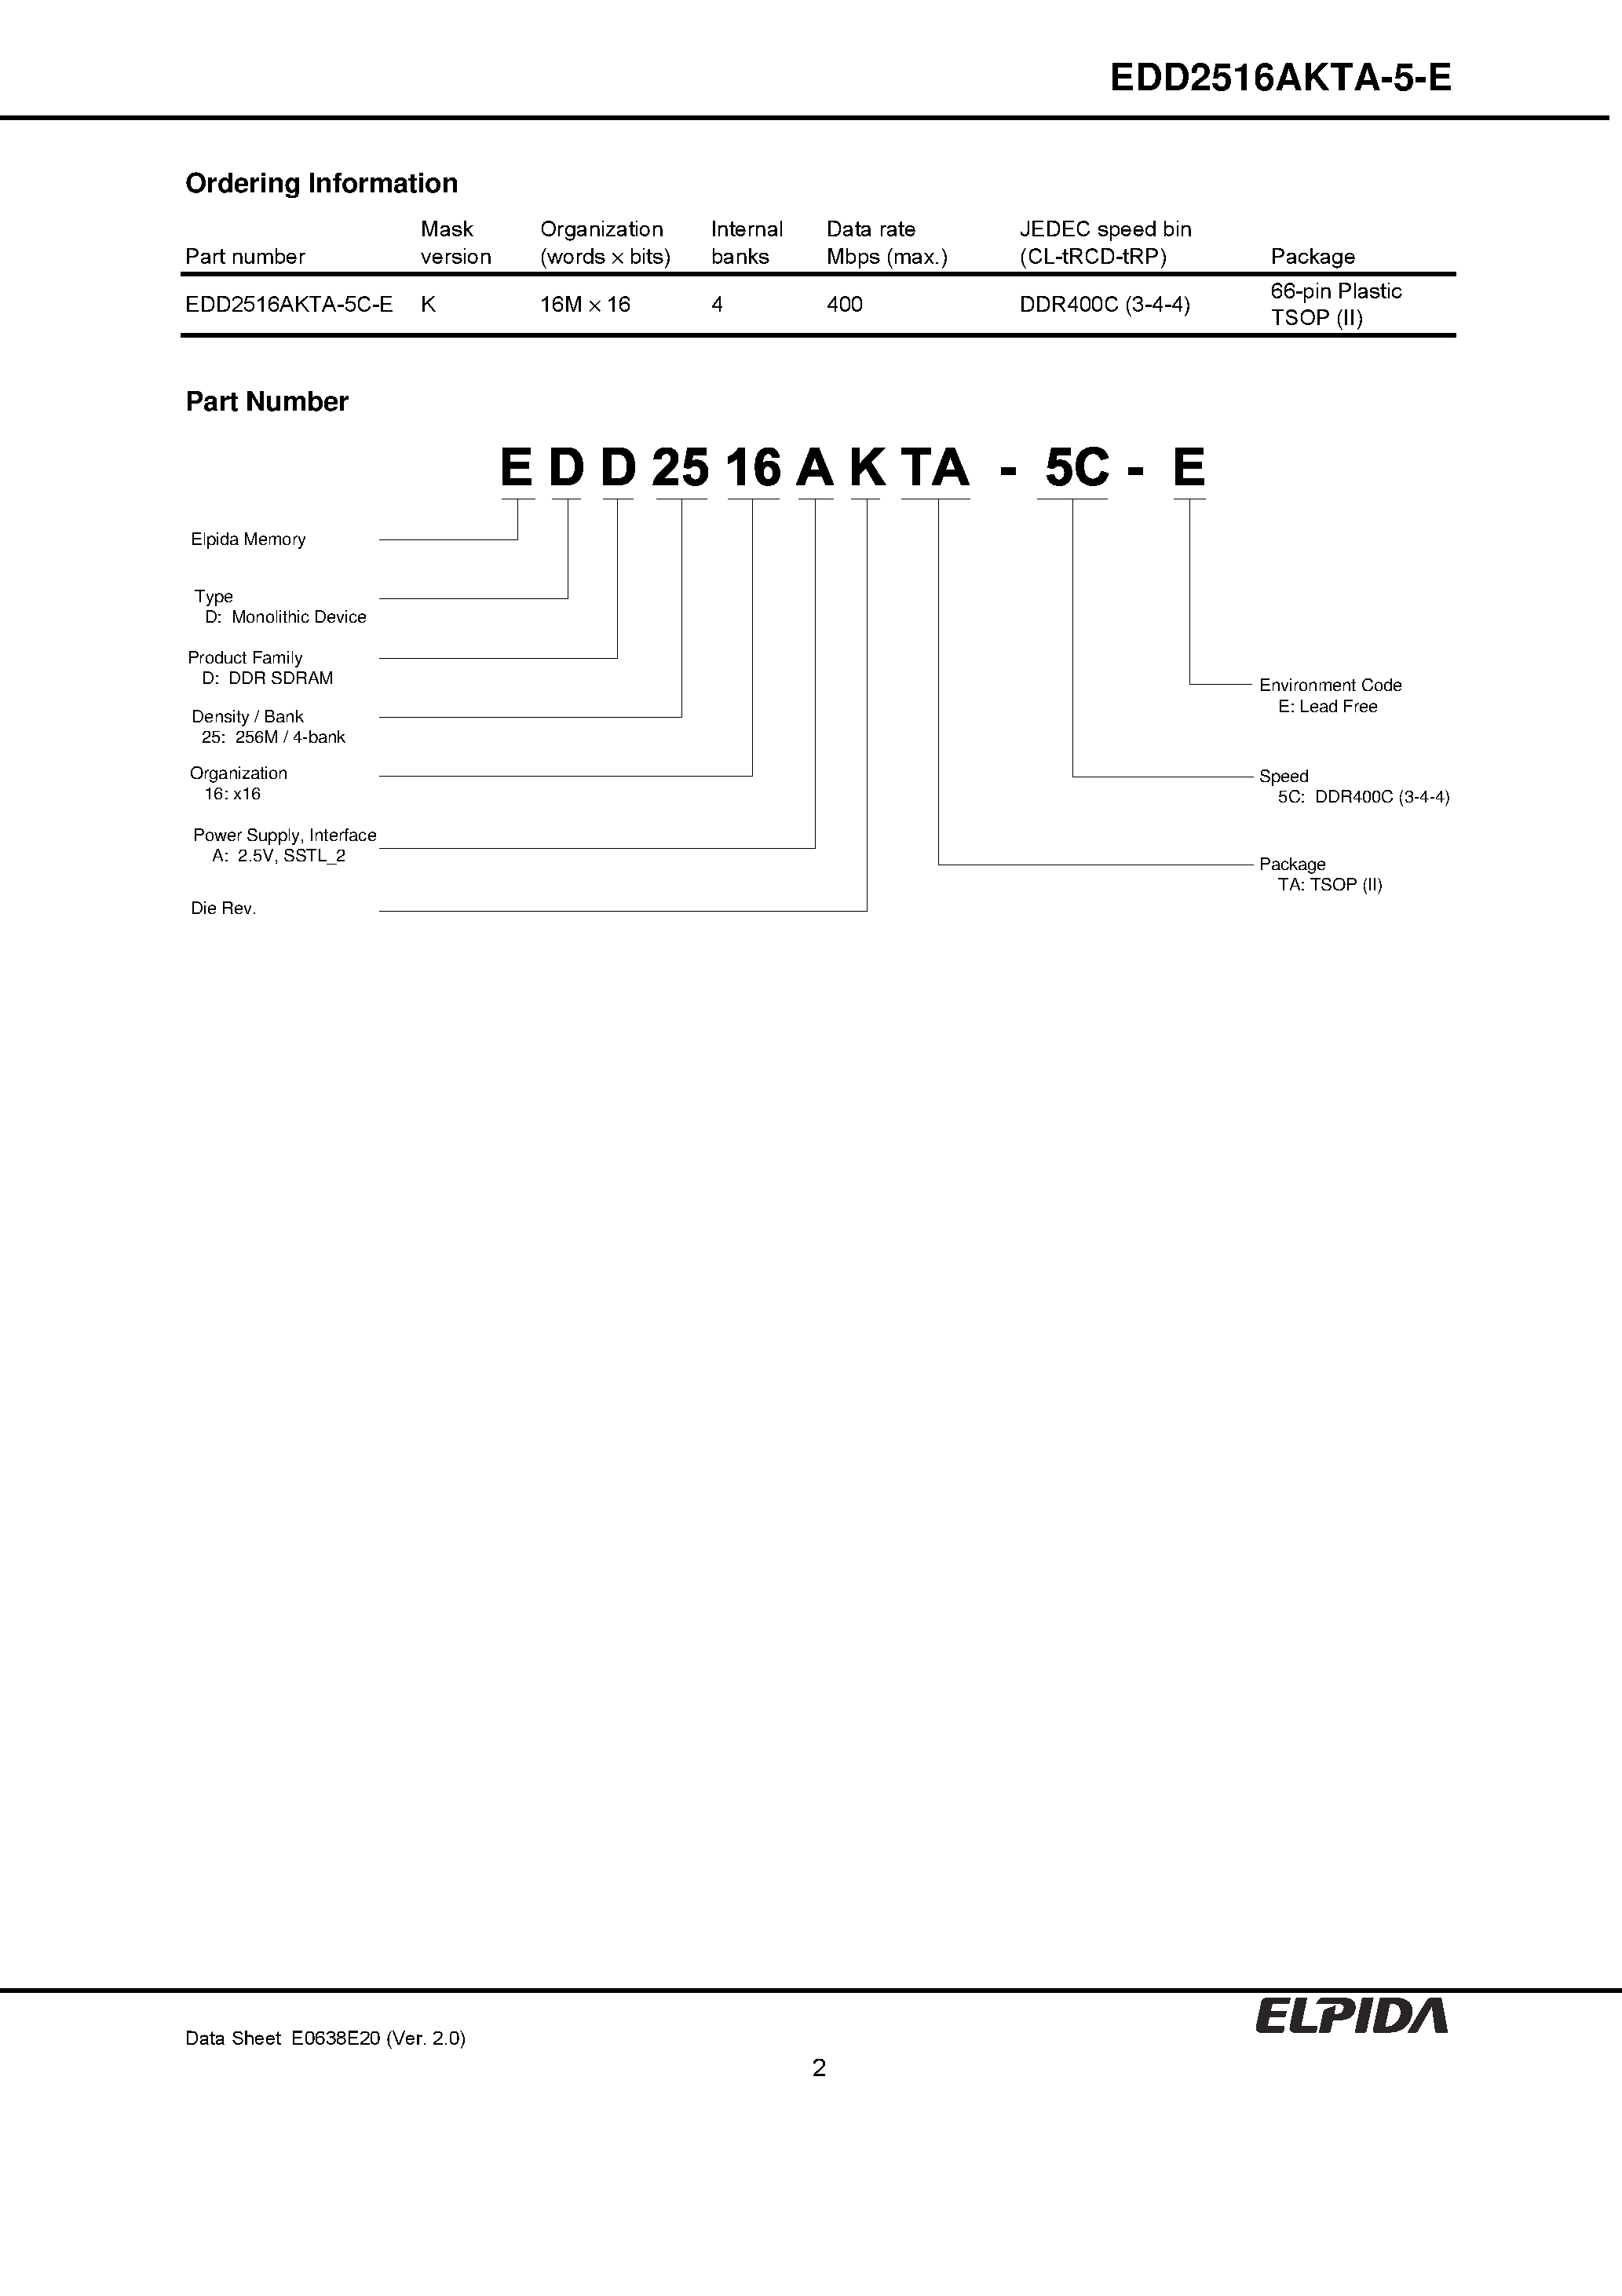 Datasheet EDD2516AKTA-5-E - 256M bits DDR SDRAM (16M words x16 bits DDR400) page 2